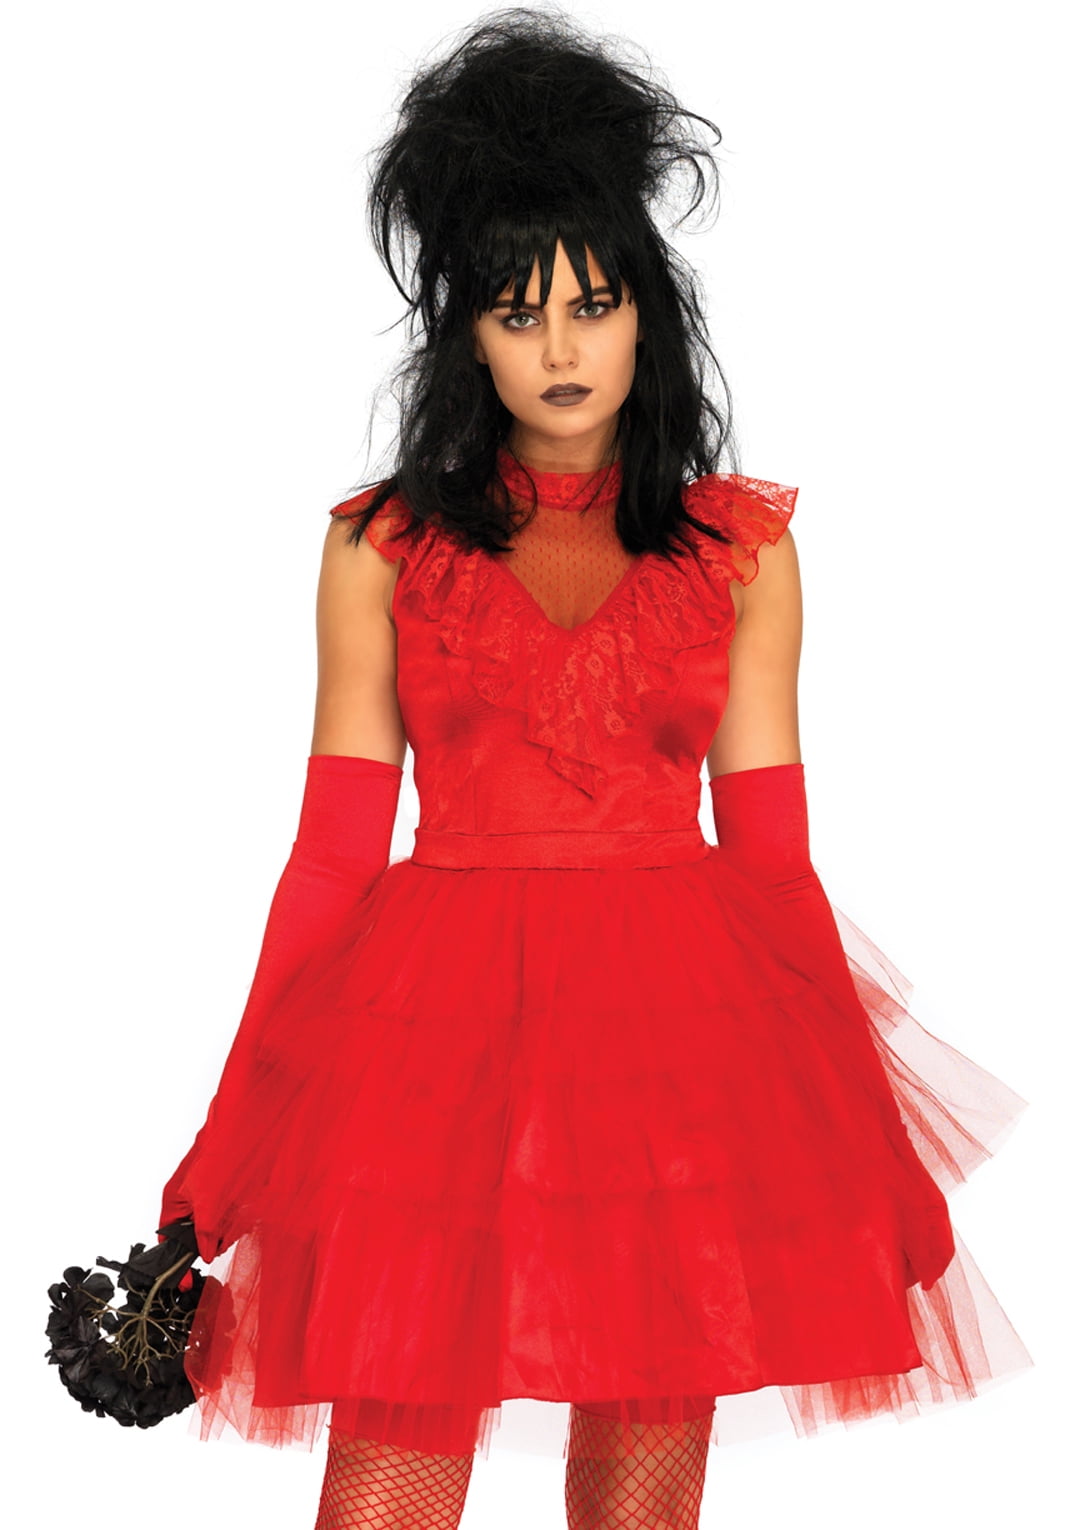 red dress halloween costume